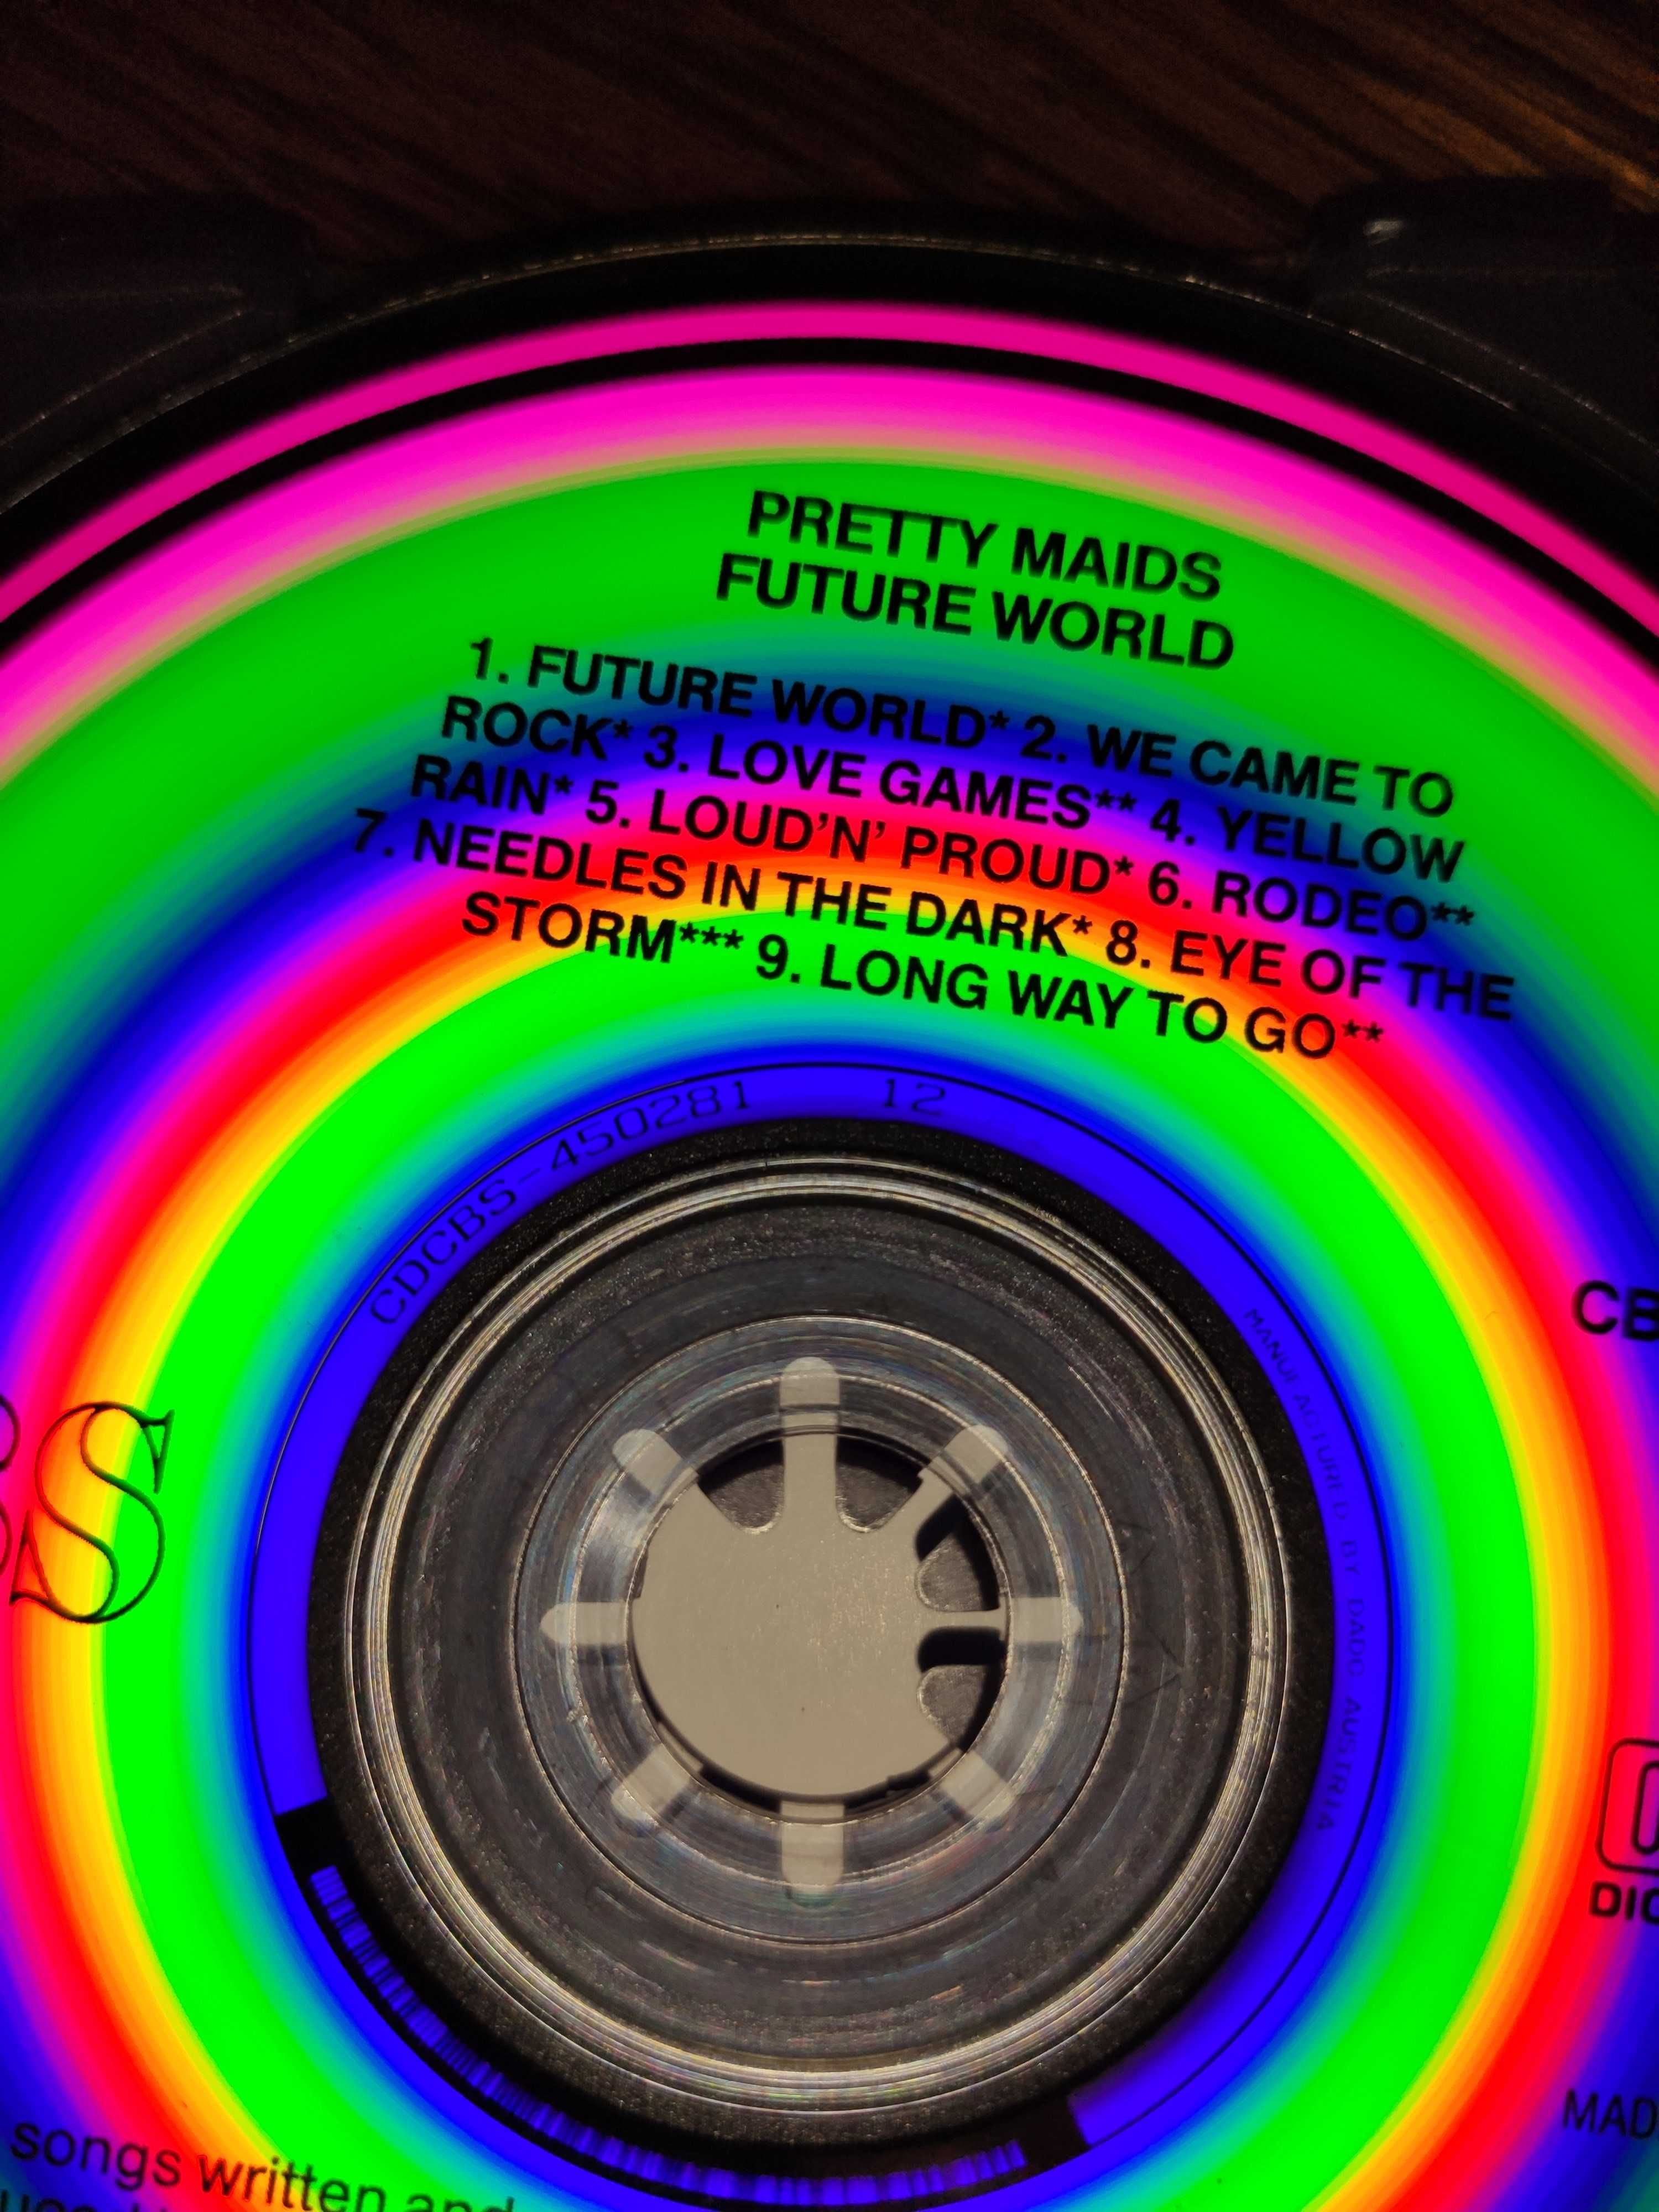 Pretty Maids - Future world, CD 1990, Nice Price, Helloween